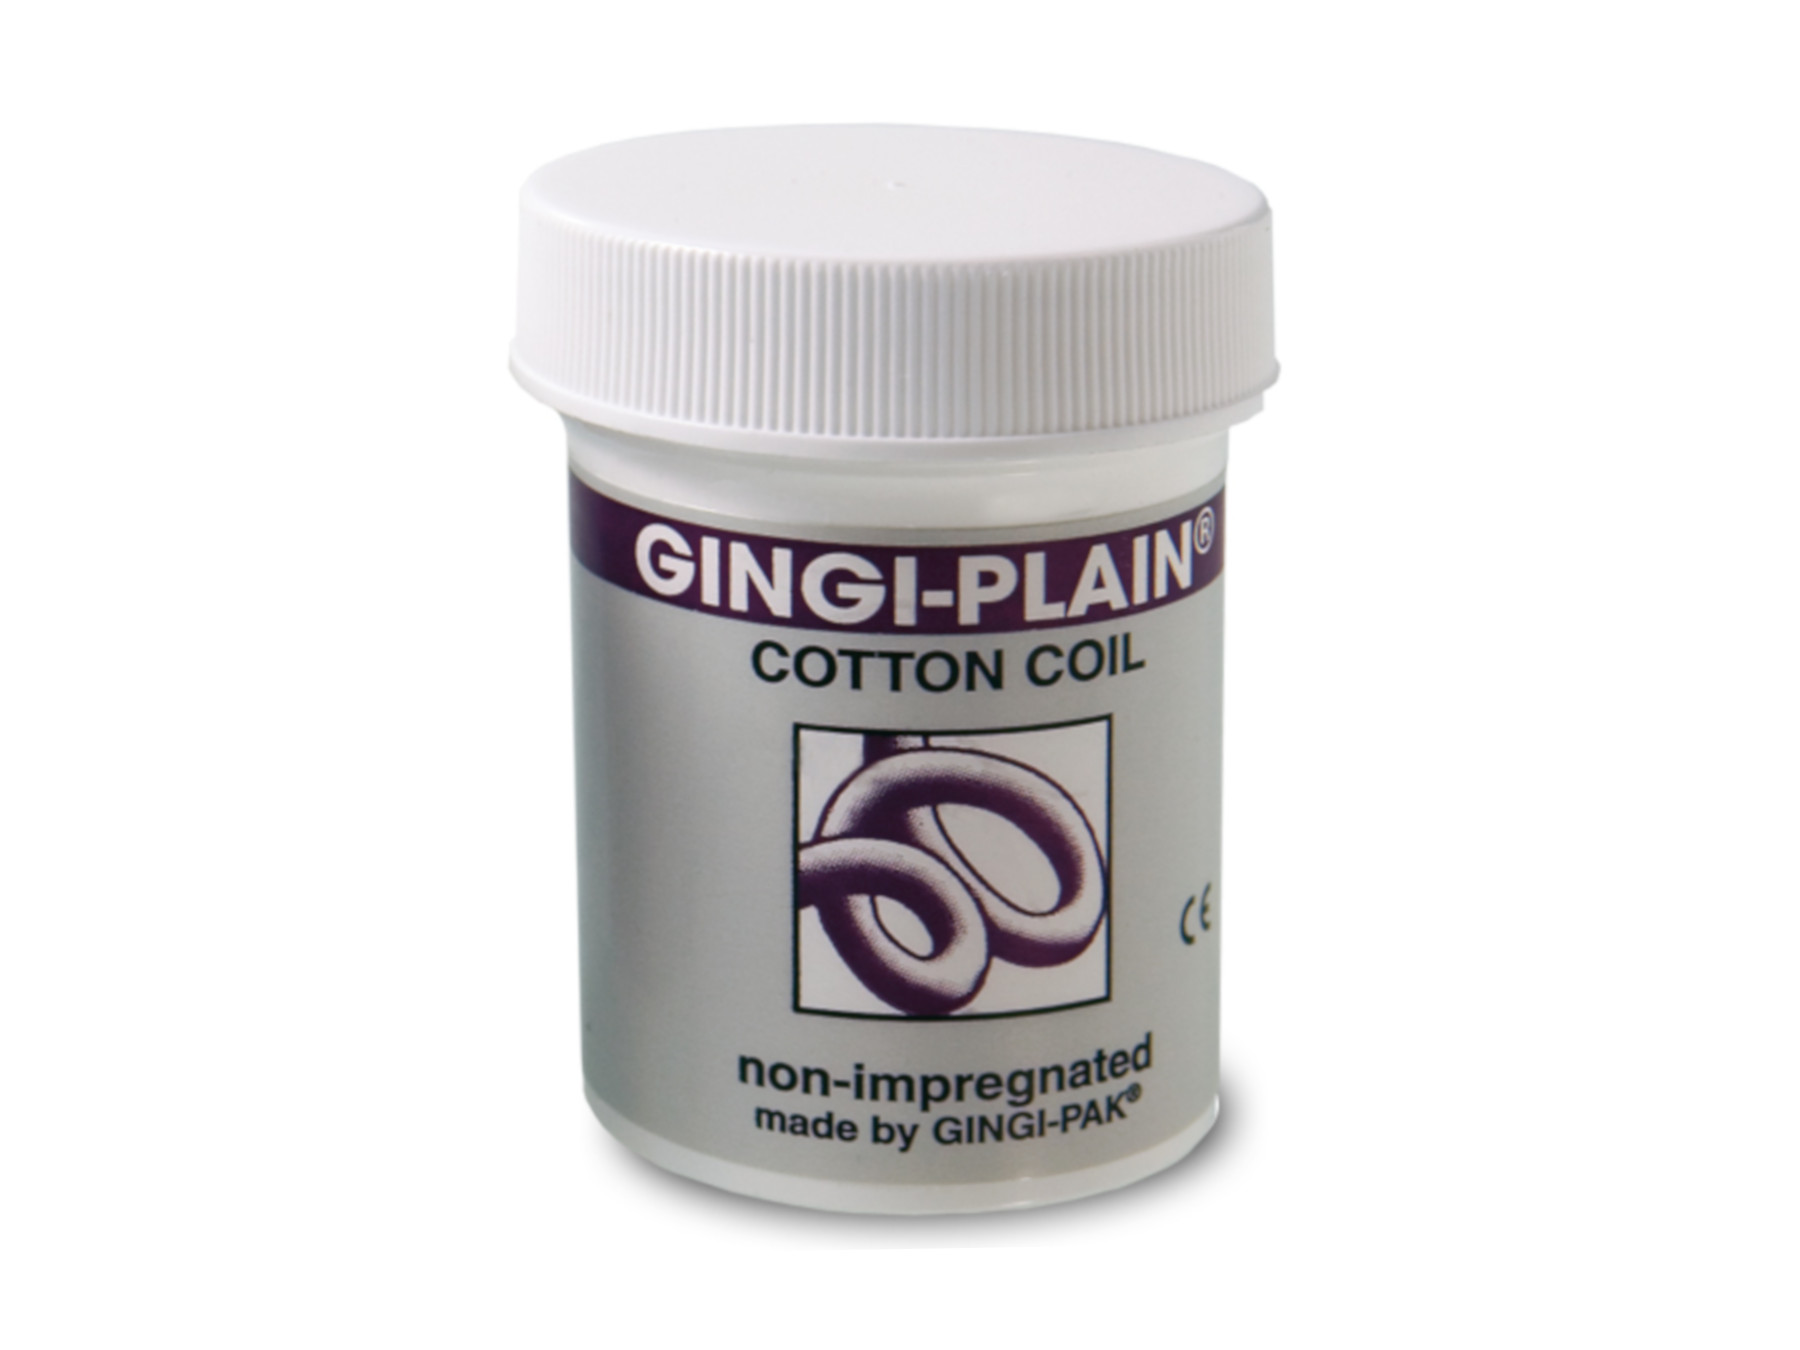 Gingi-Plain® Cotton Coil